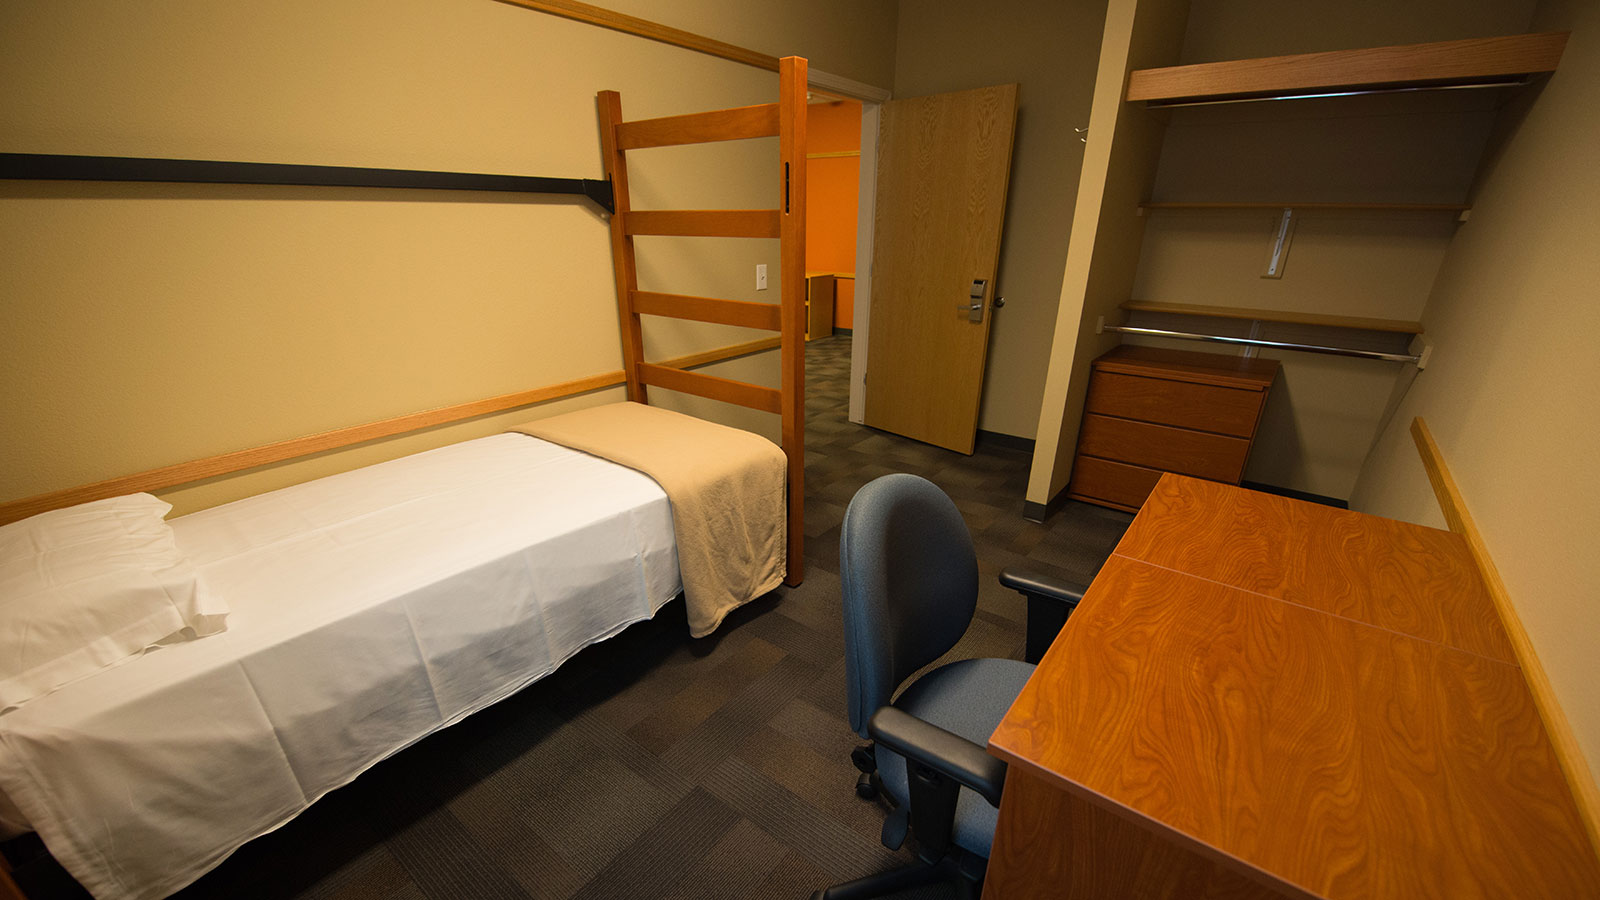 Single bed dorm room.